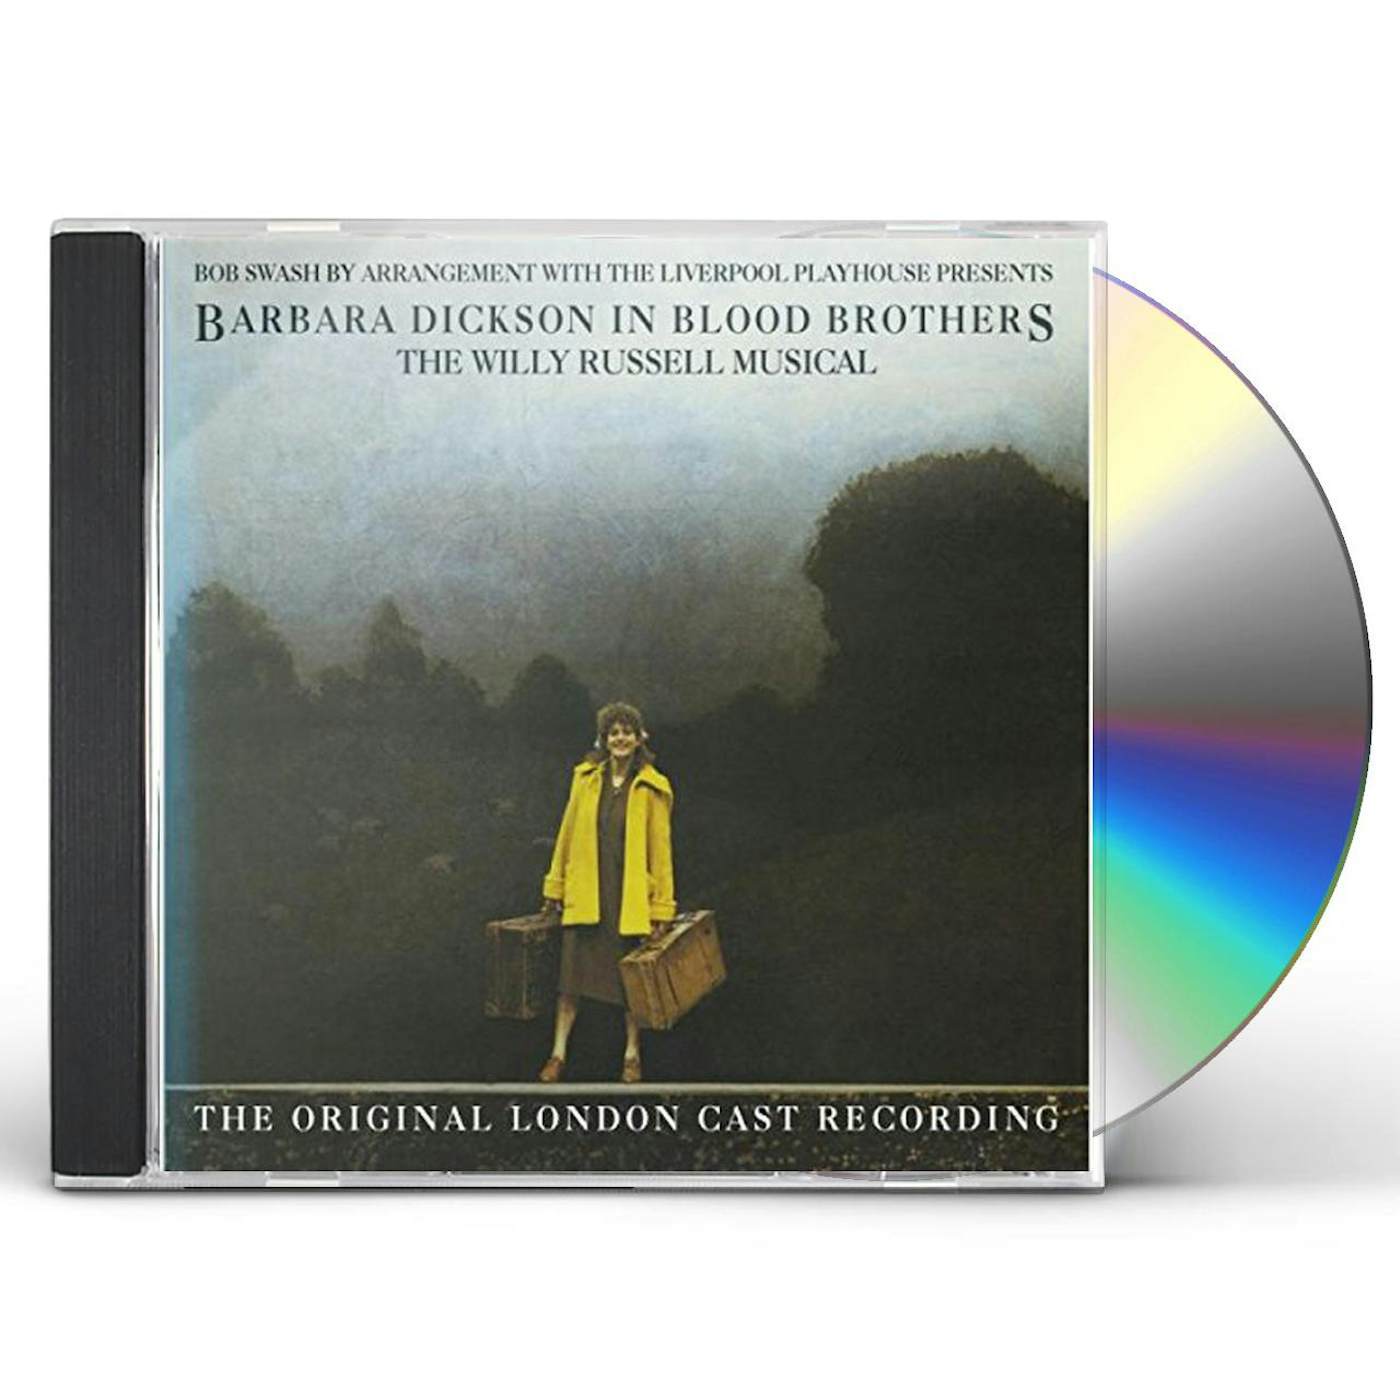 BARBARA DICKSON IN BLOOD BROTHERS CD